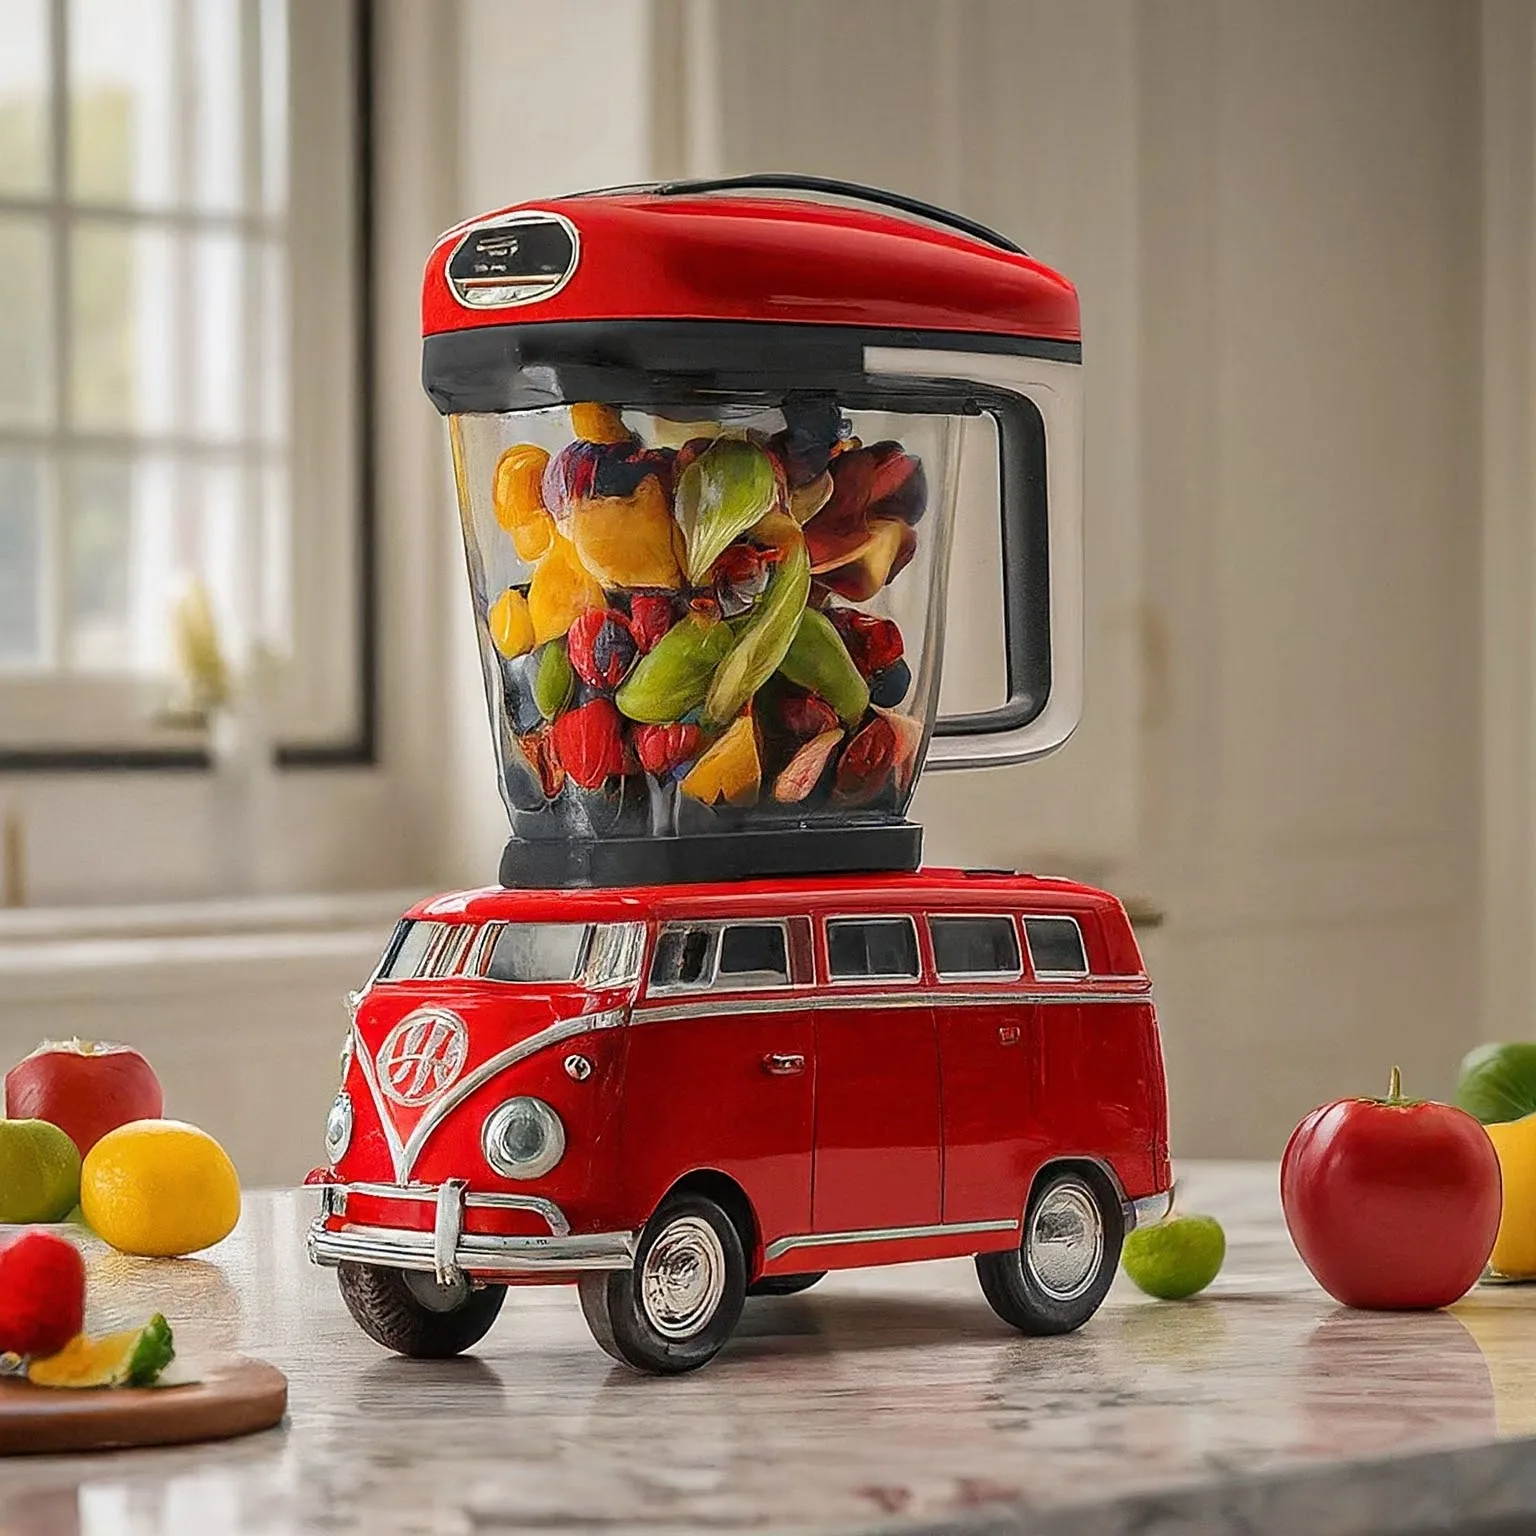 Iconic Retro Style: Volkswagen Bus Inspired Kitchen Appliances